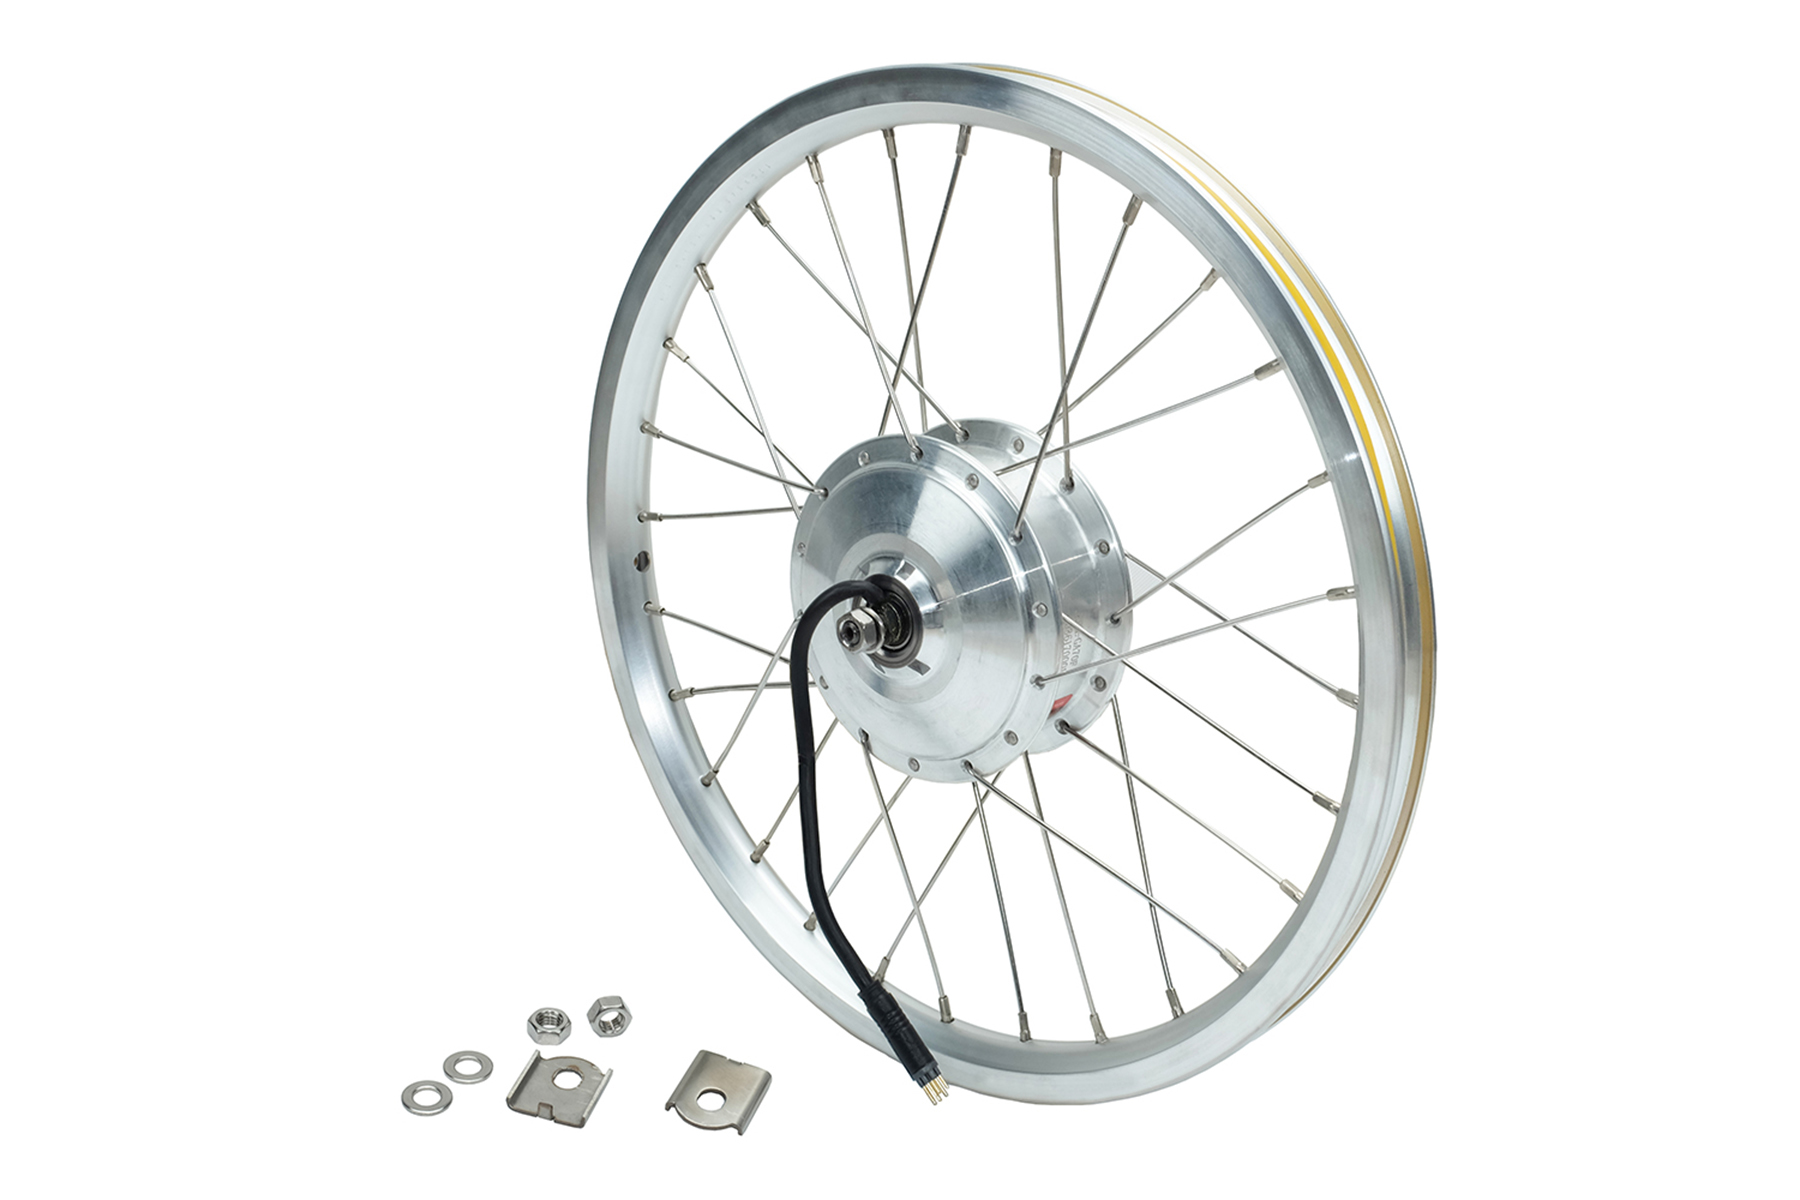 Akku, DIY hub Volt, for 8700 Kit POWERSMART in Brompton Folding E-Bike mini Li-ion Bike 36 mAh 75mm Conversion